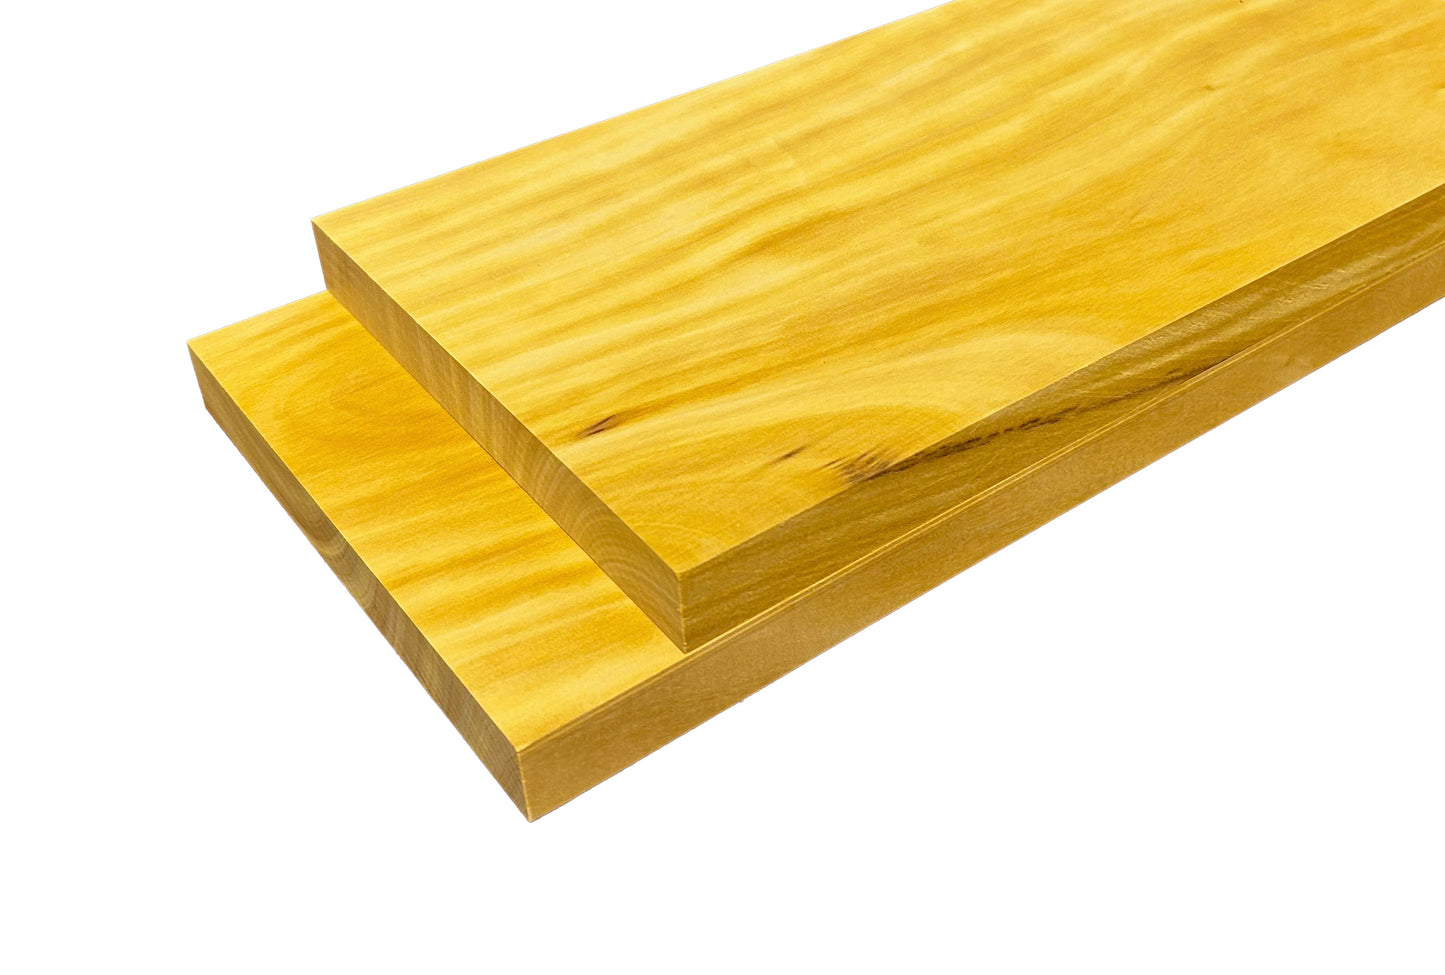 Yellowheart Lumber Boards 3/4" x 6" (2pcs)